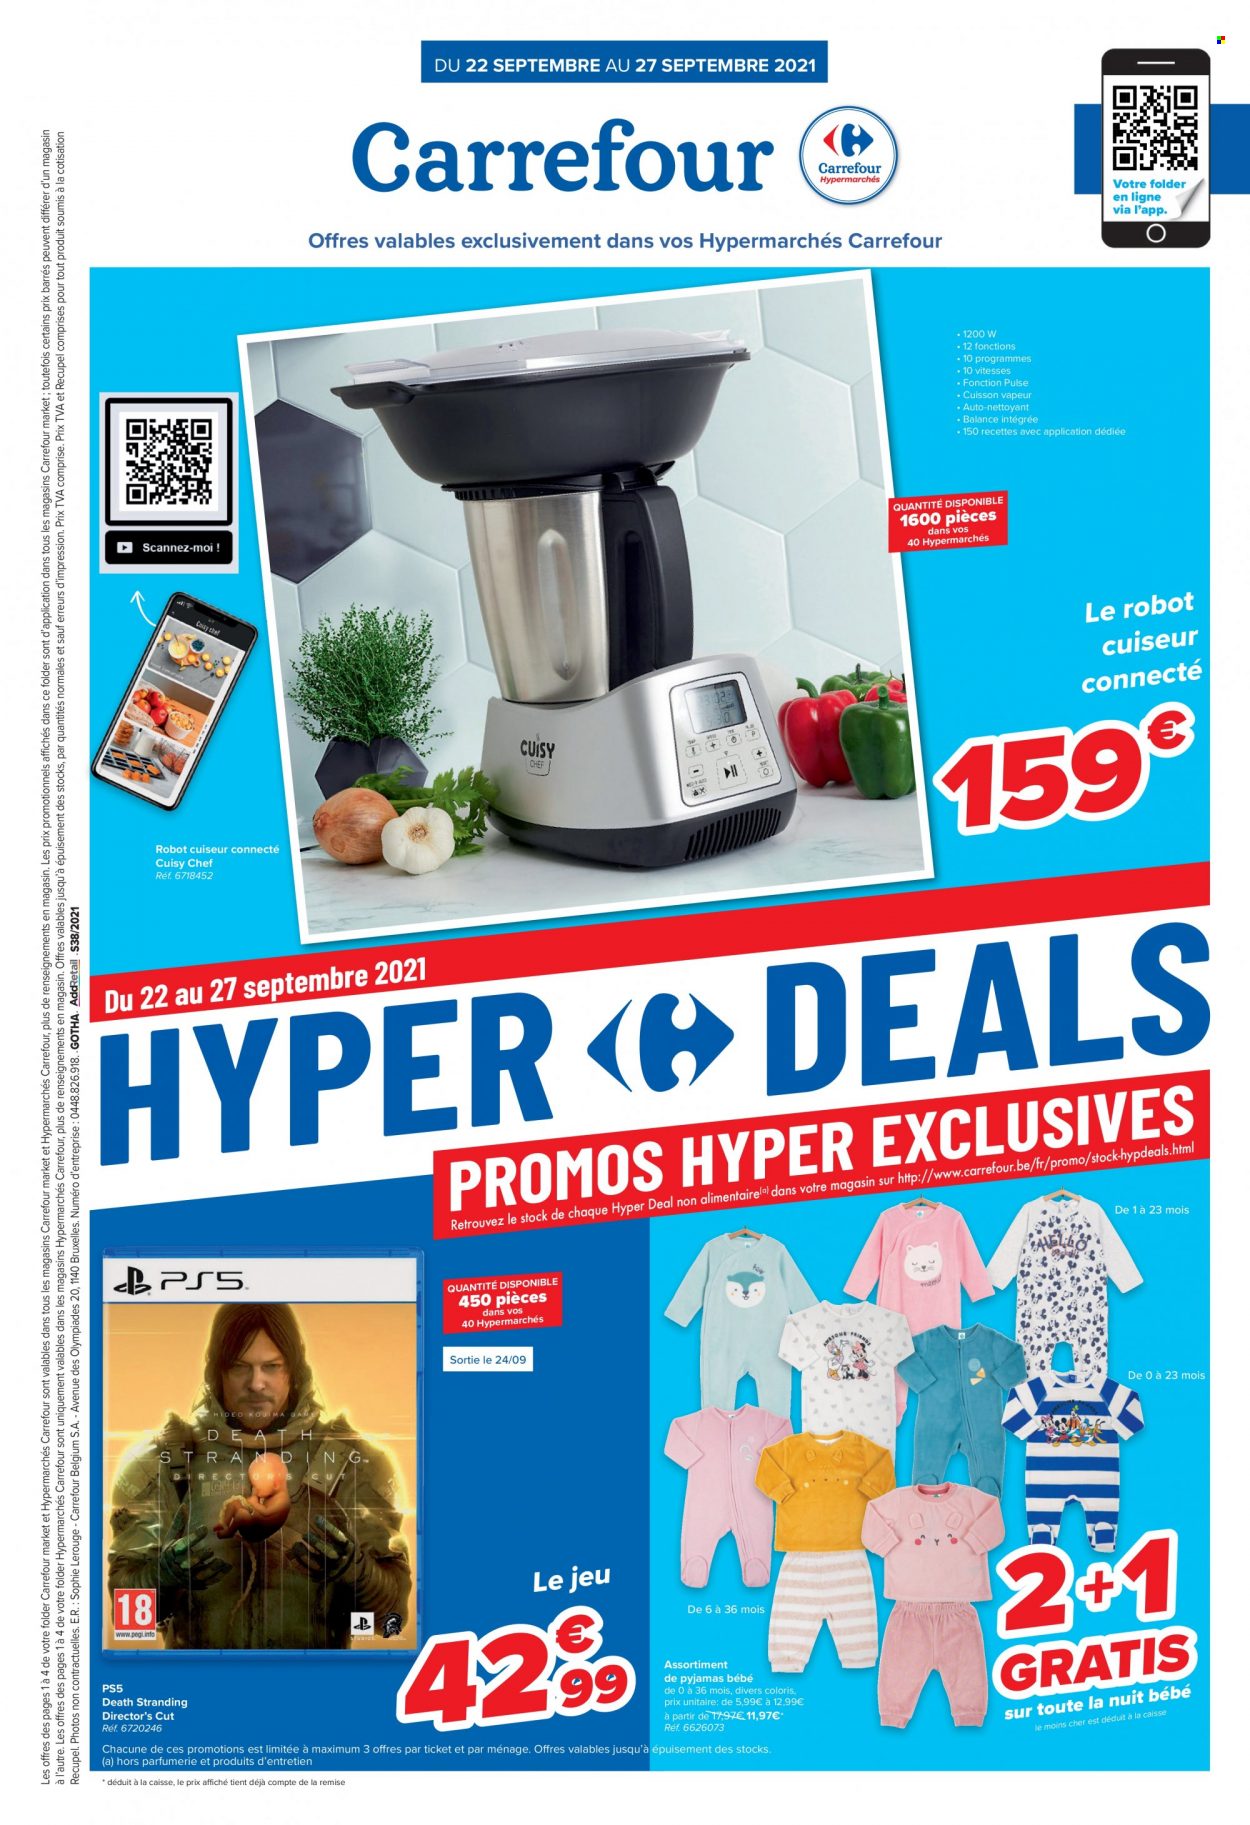 thumbnail - Carrefour hypermarkt-aanbieding - 22/09/2021 - 27/09/2021 -  producten in de aanbieding - PlayStation 5, robot. Pagina 1.